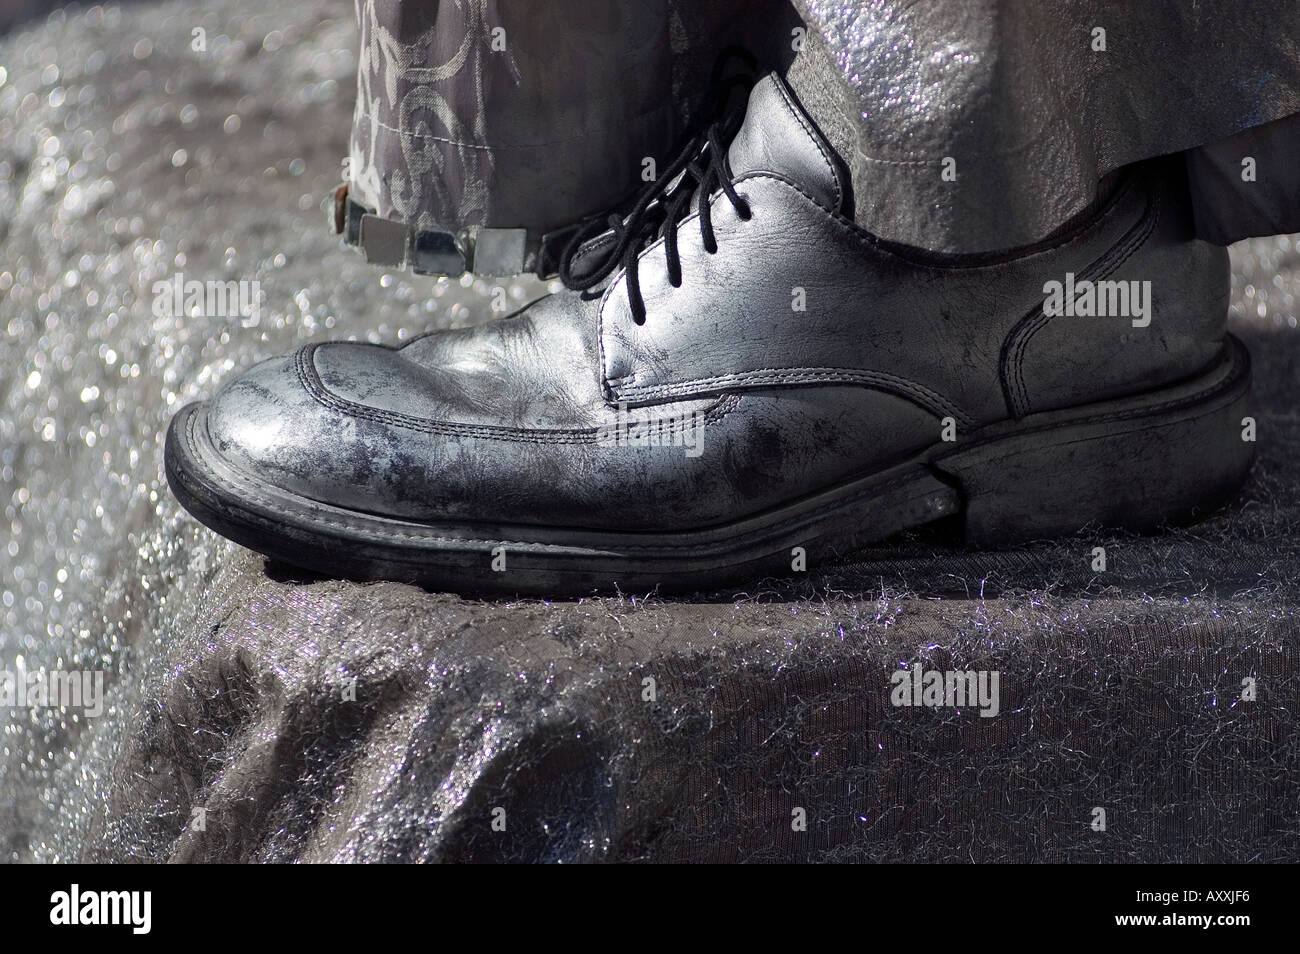 elvis presley shoes close up Stock Photo - Alamy